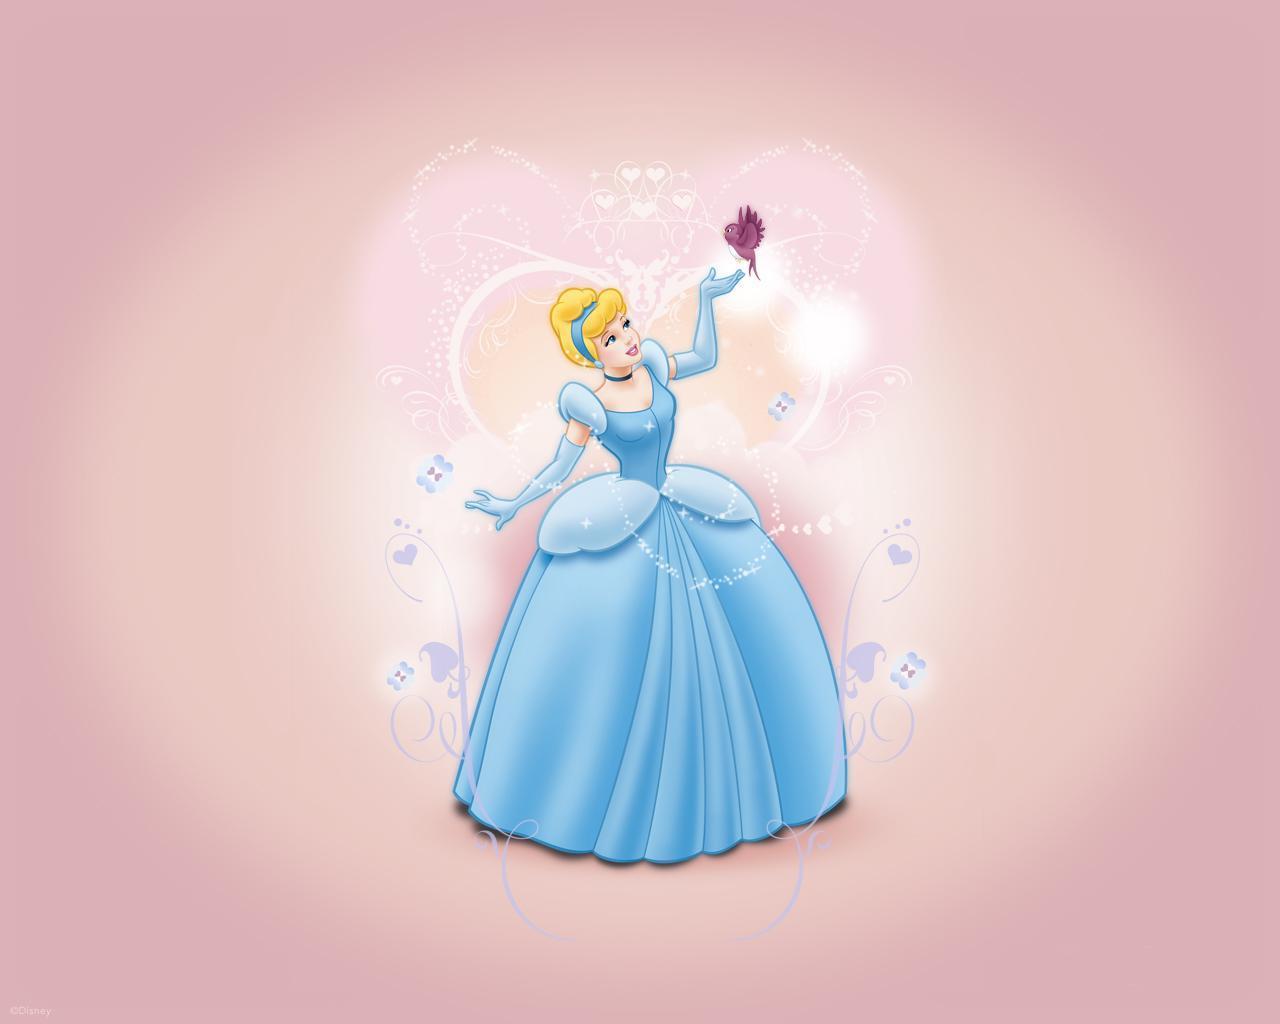 Princess Cinderella Disney Princess - Disney Princess Cinderella -  1280x1024 Wallpaper 